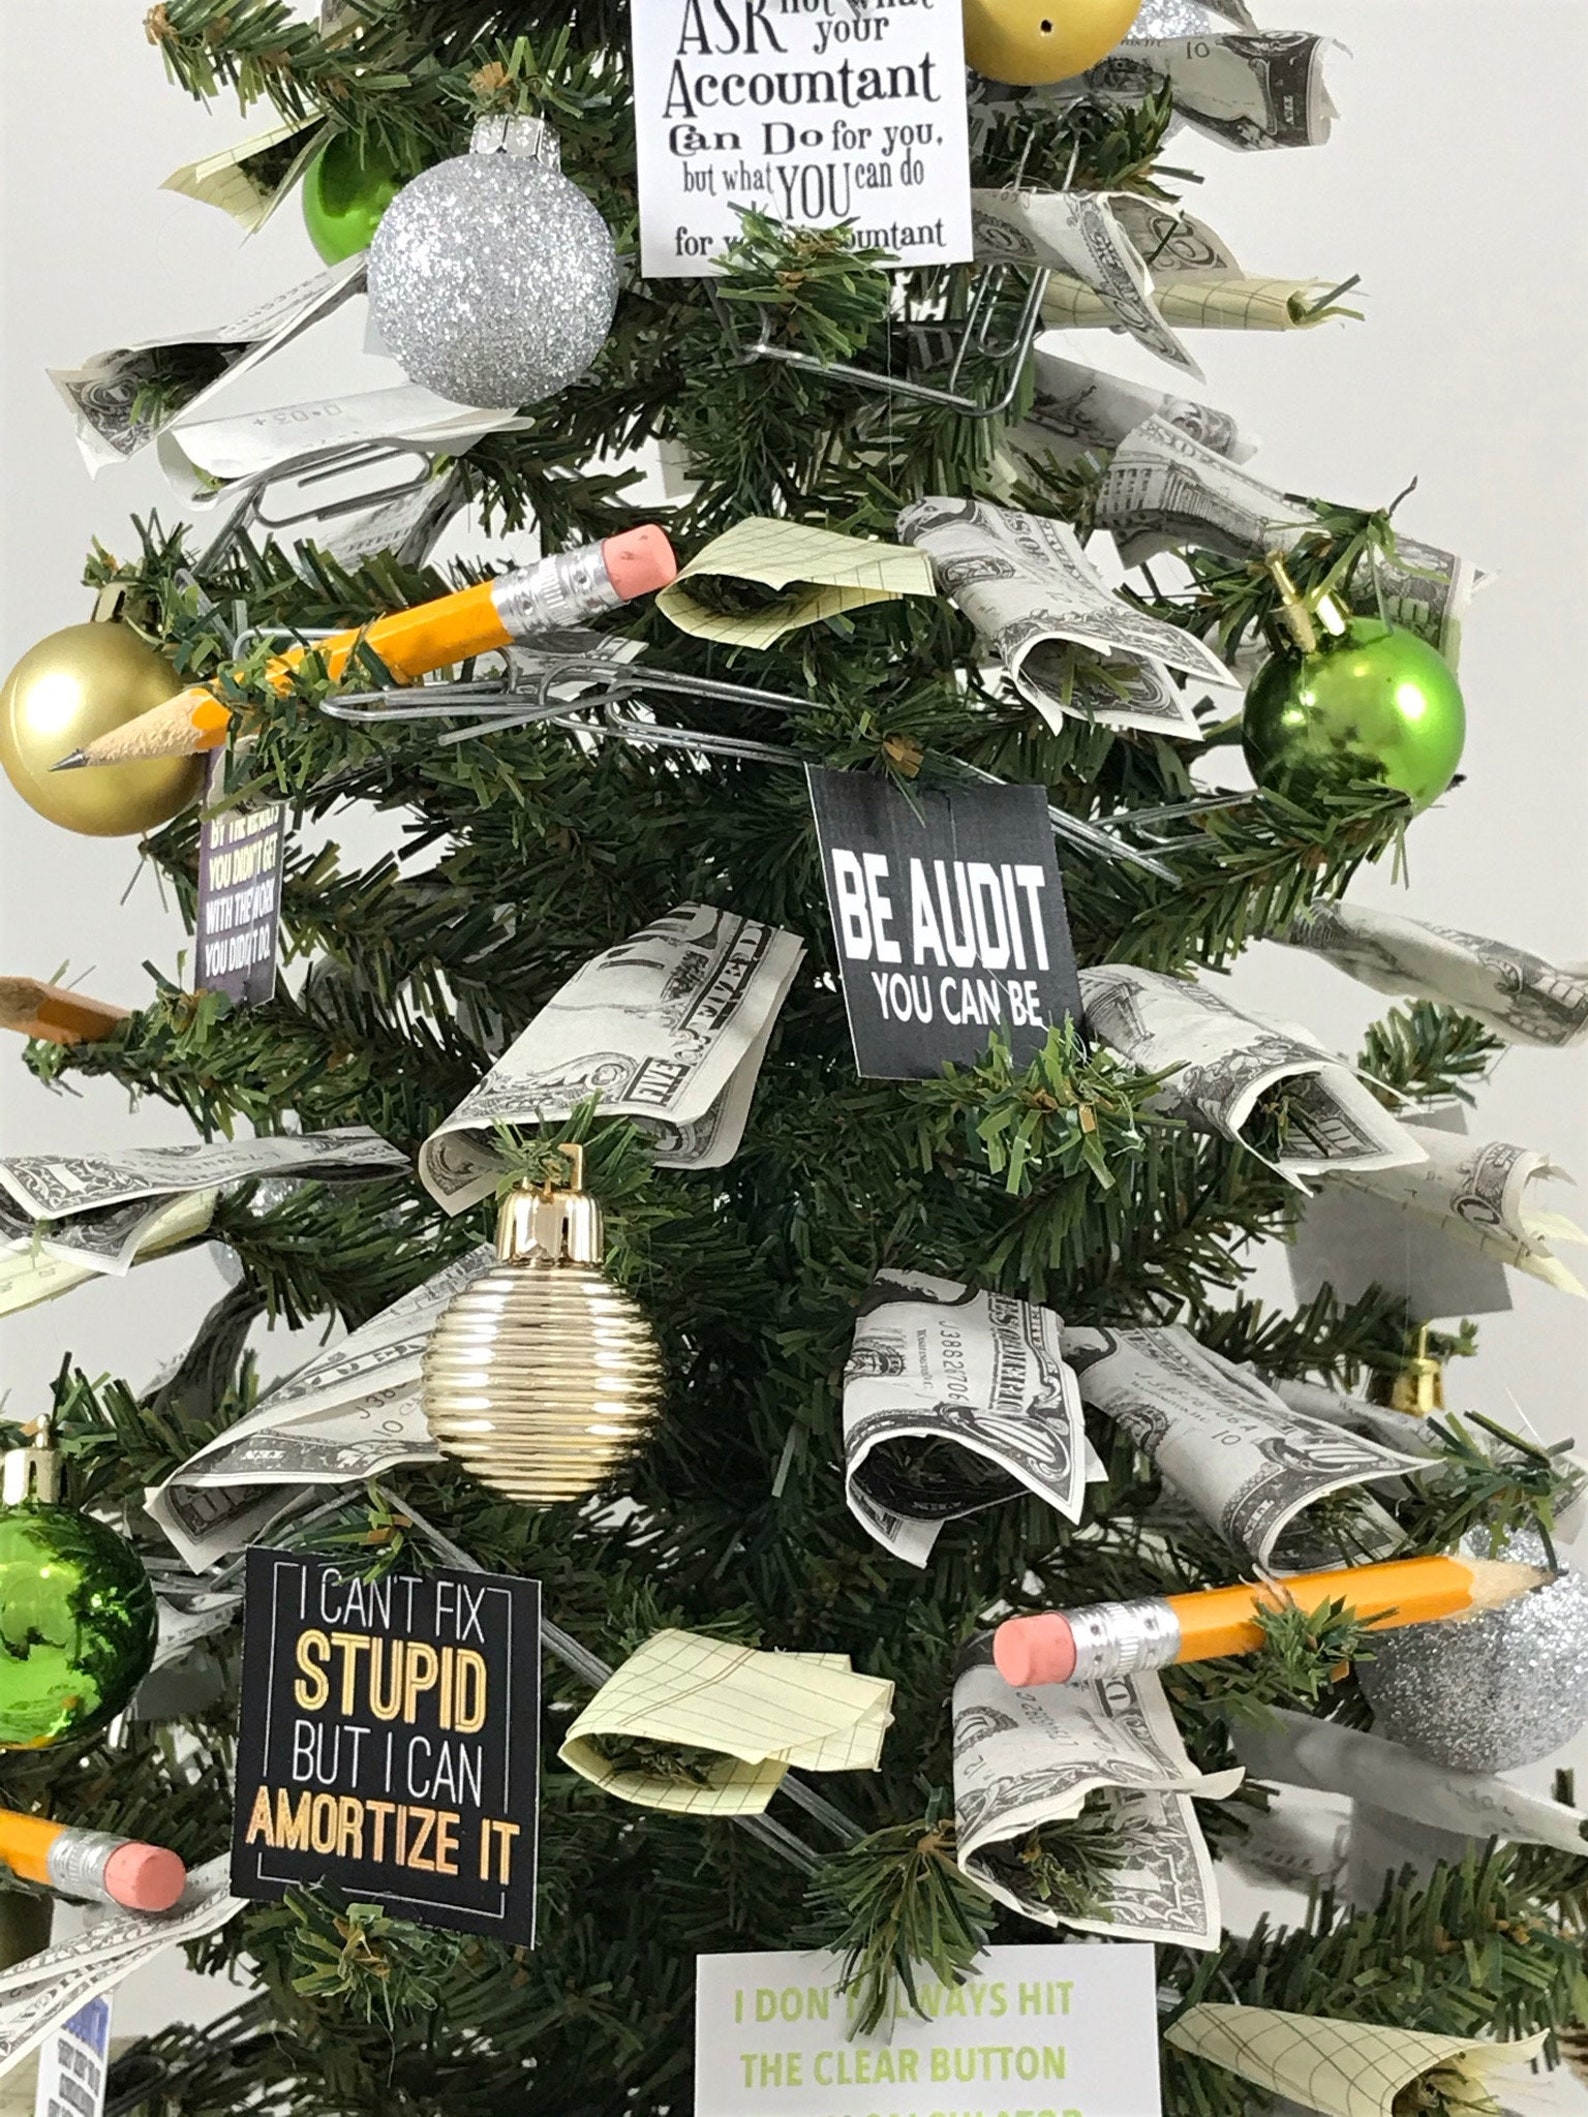 Large Accountant Themed Christmas Tree - Etsy